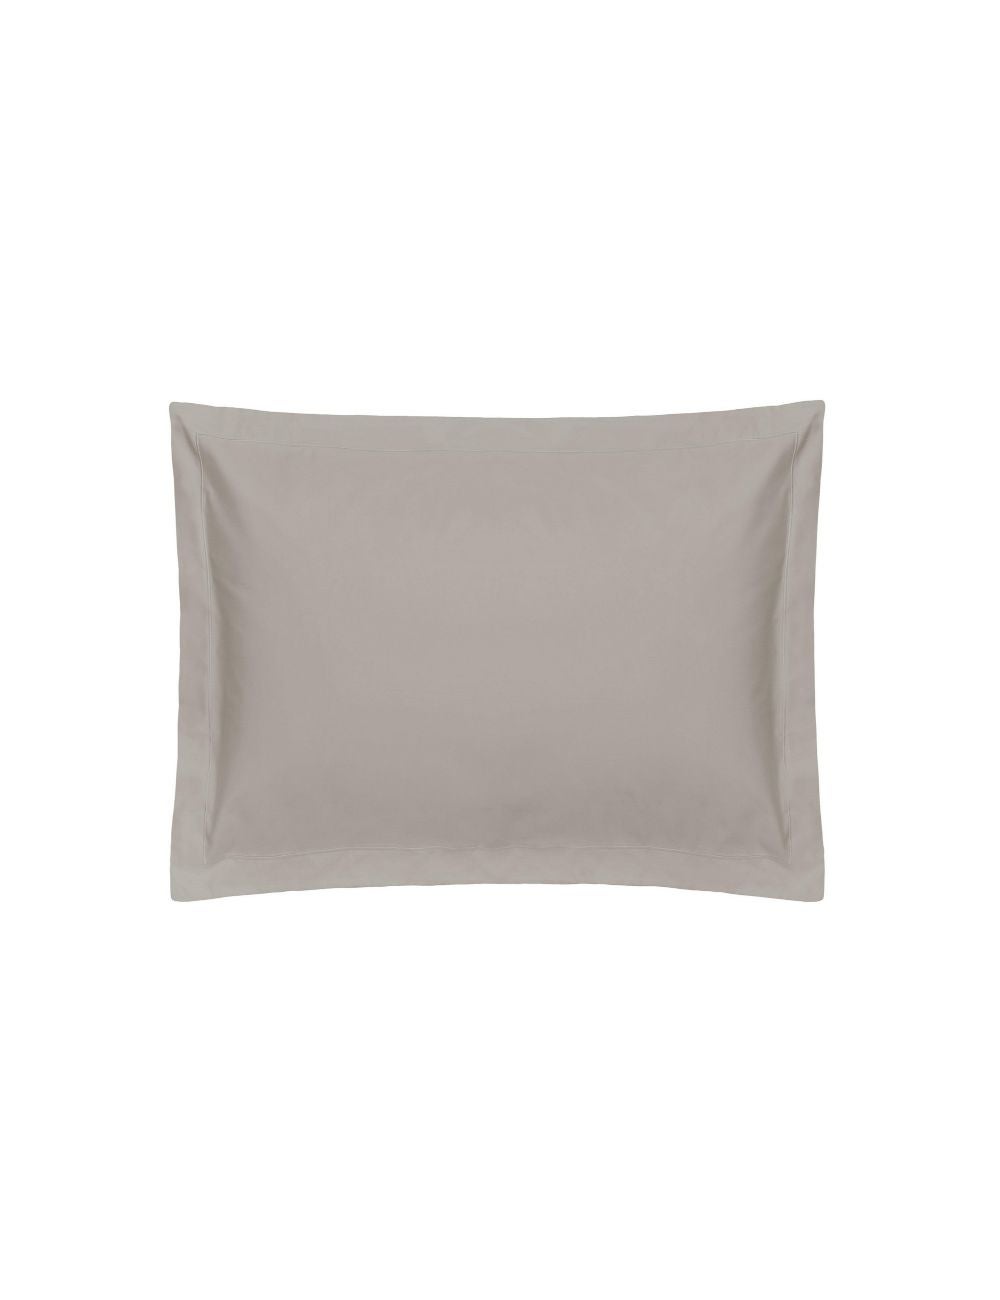 Belledorm 400 Thread Count Egyptian Cotton Oxford Pillowcase | Crossroads